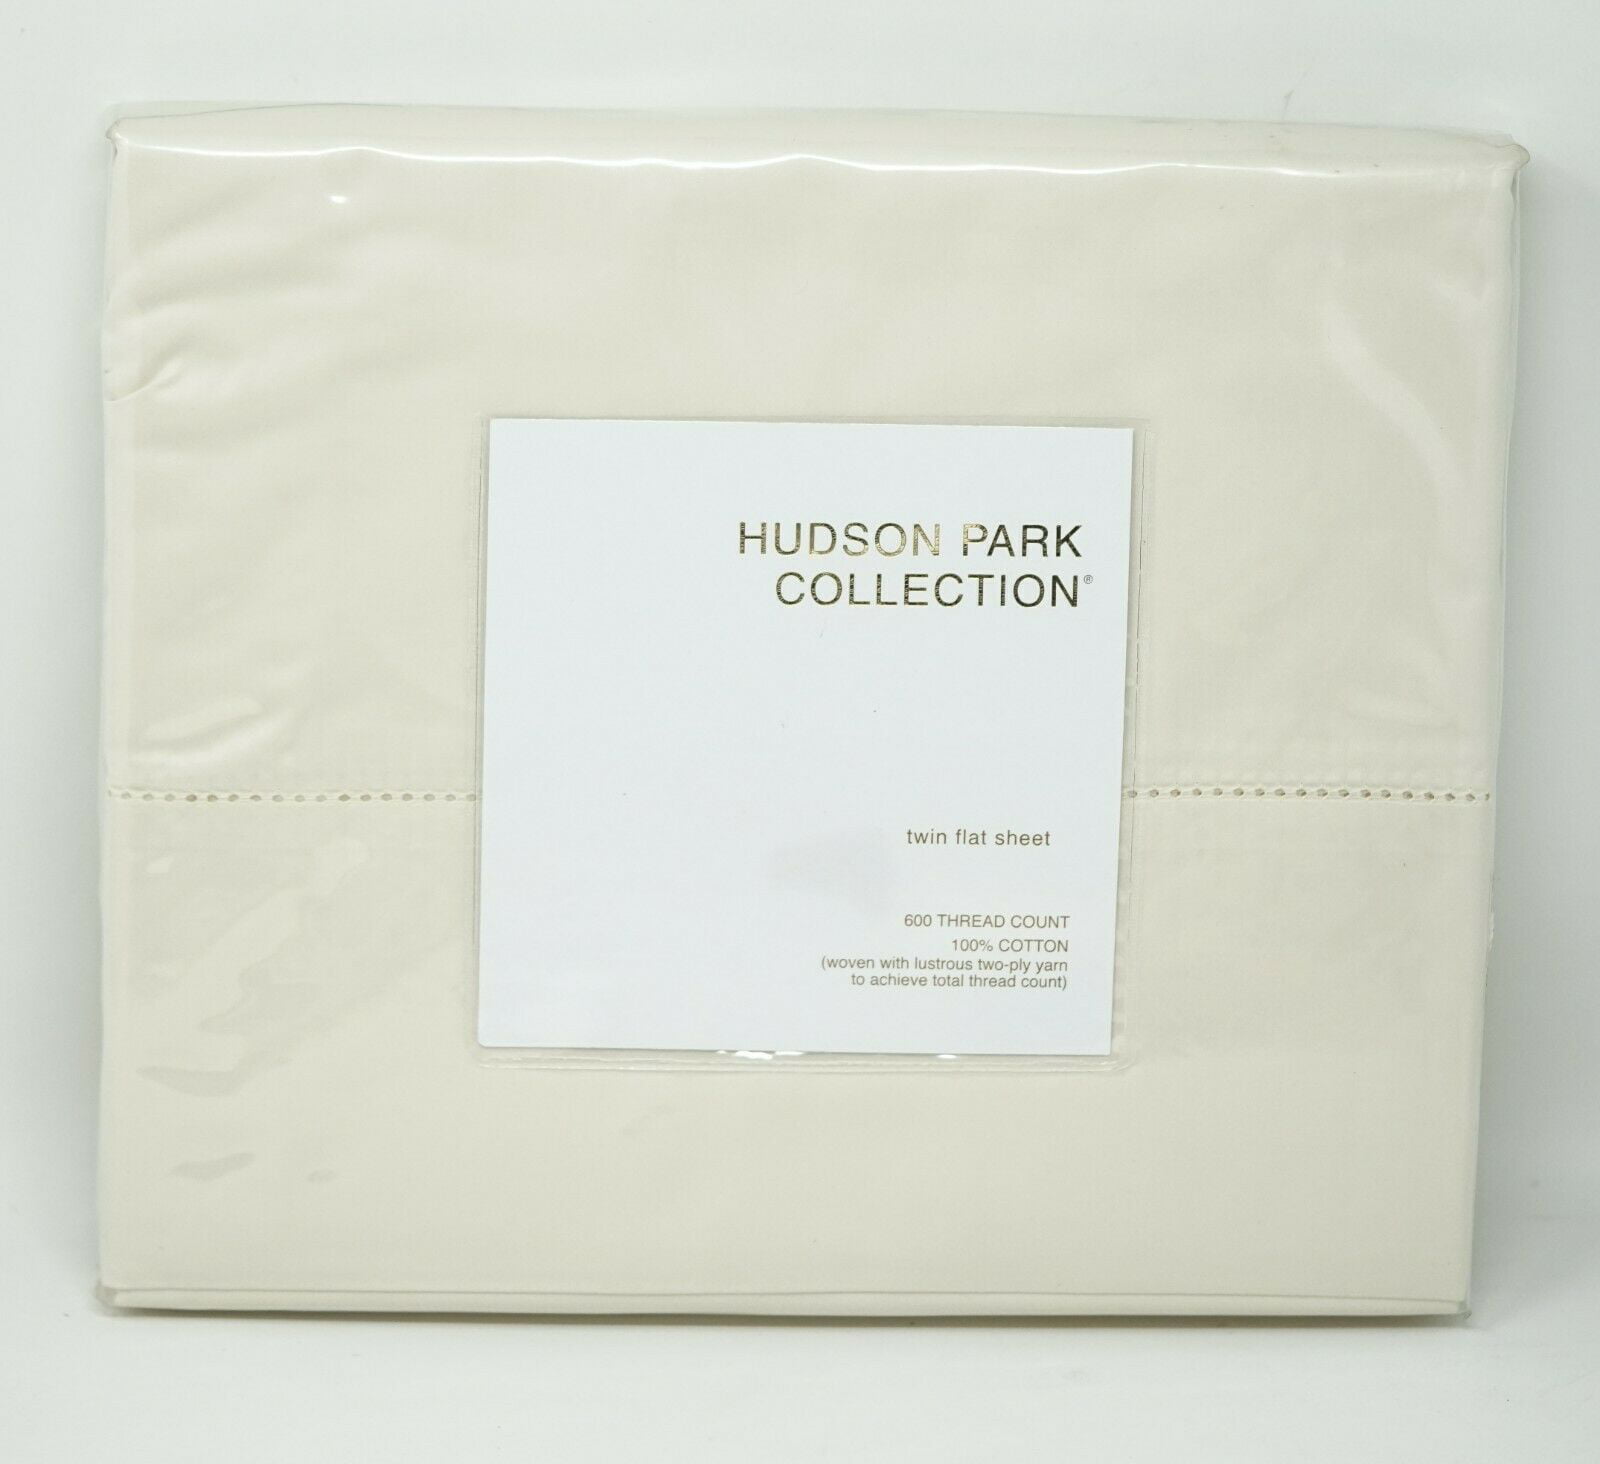 Details about   Hudson Park 600 Thread Count Sateen 100% Cotton KING Flat Sheet IVORY $185 BVP 